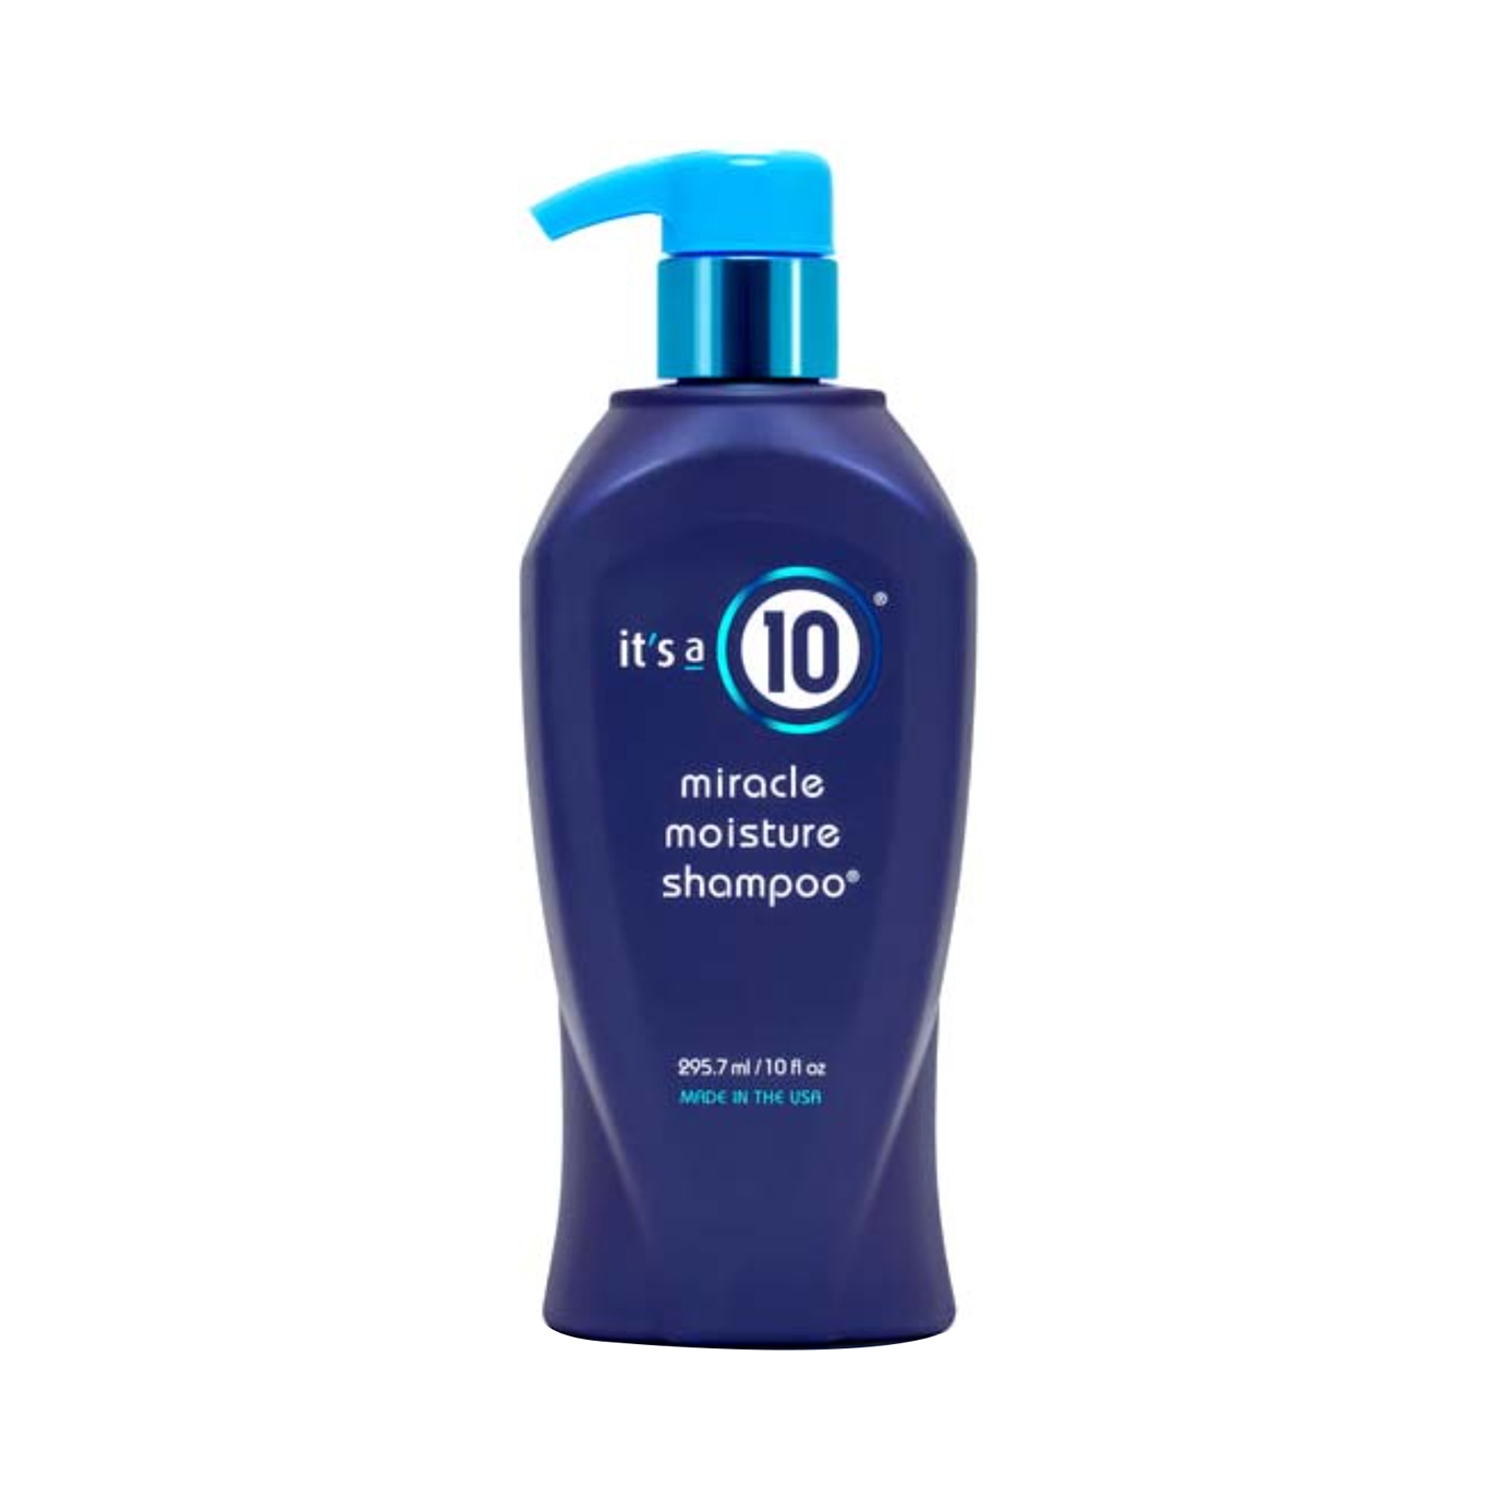 It's a 10 Haircare | It's a 10 Haircare Miracle Moisture Shampoo (295.7ml)